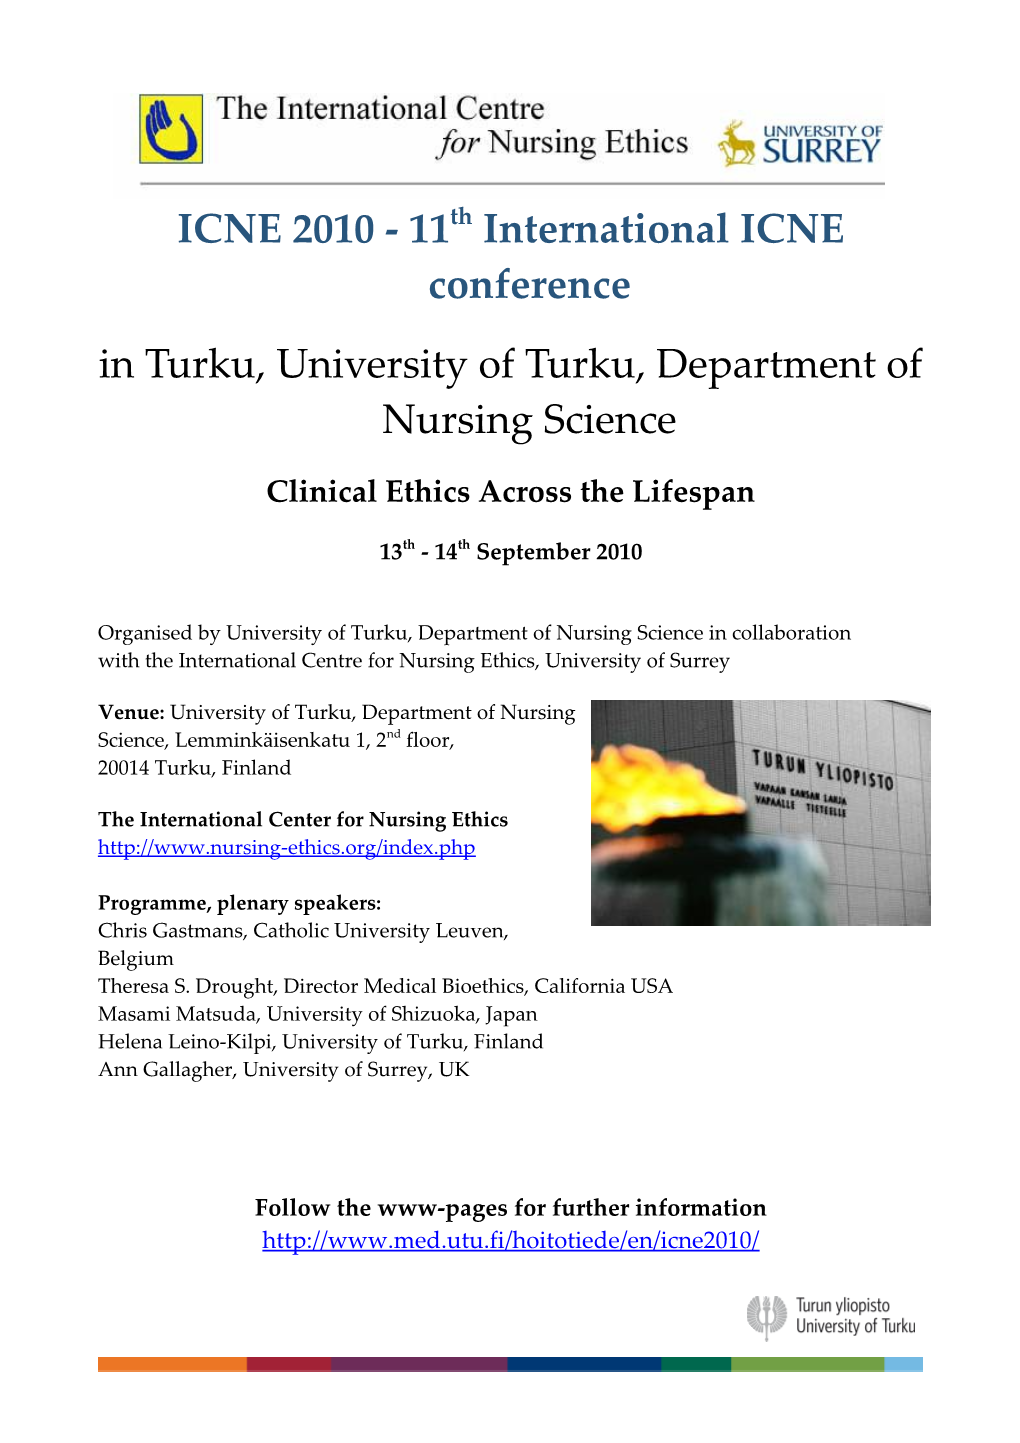 ICNE 2010 - 11Th International ICNE Conference